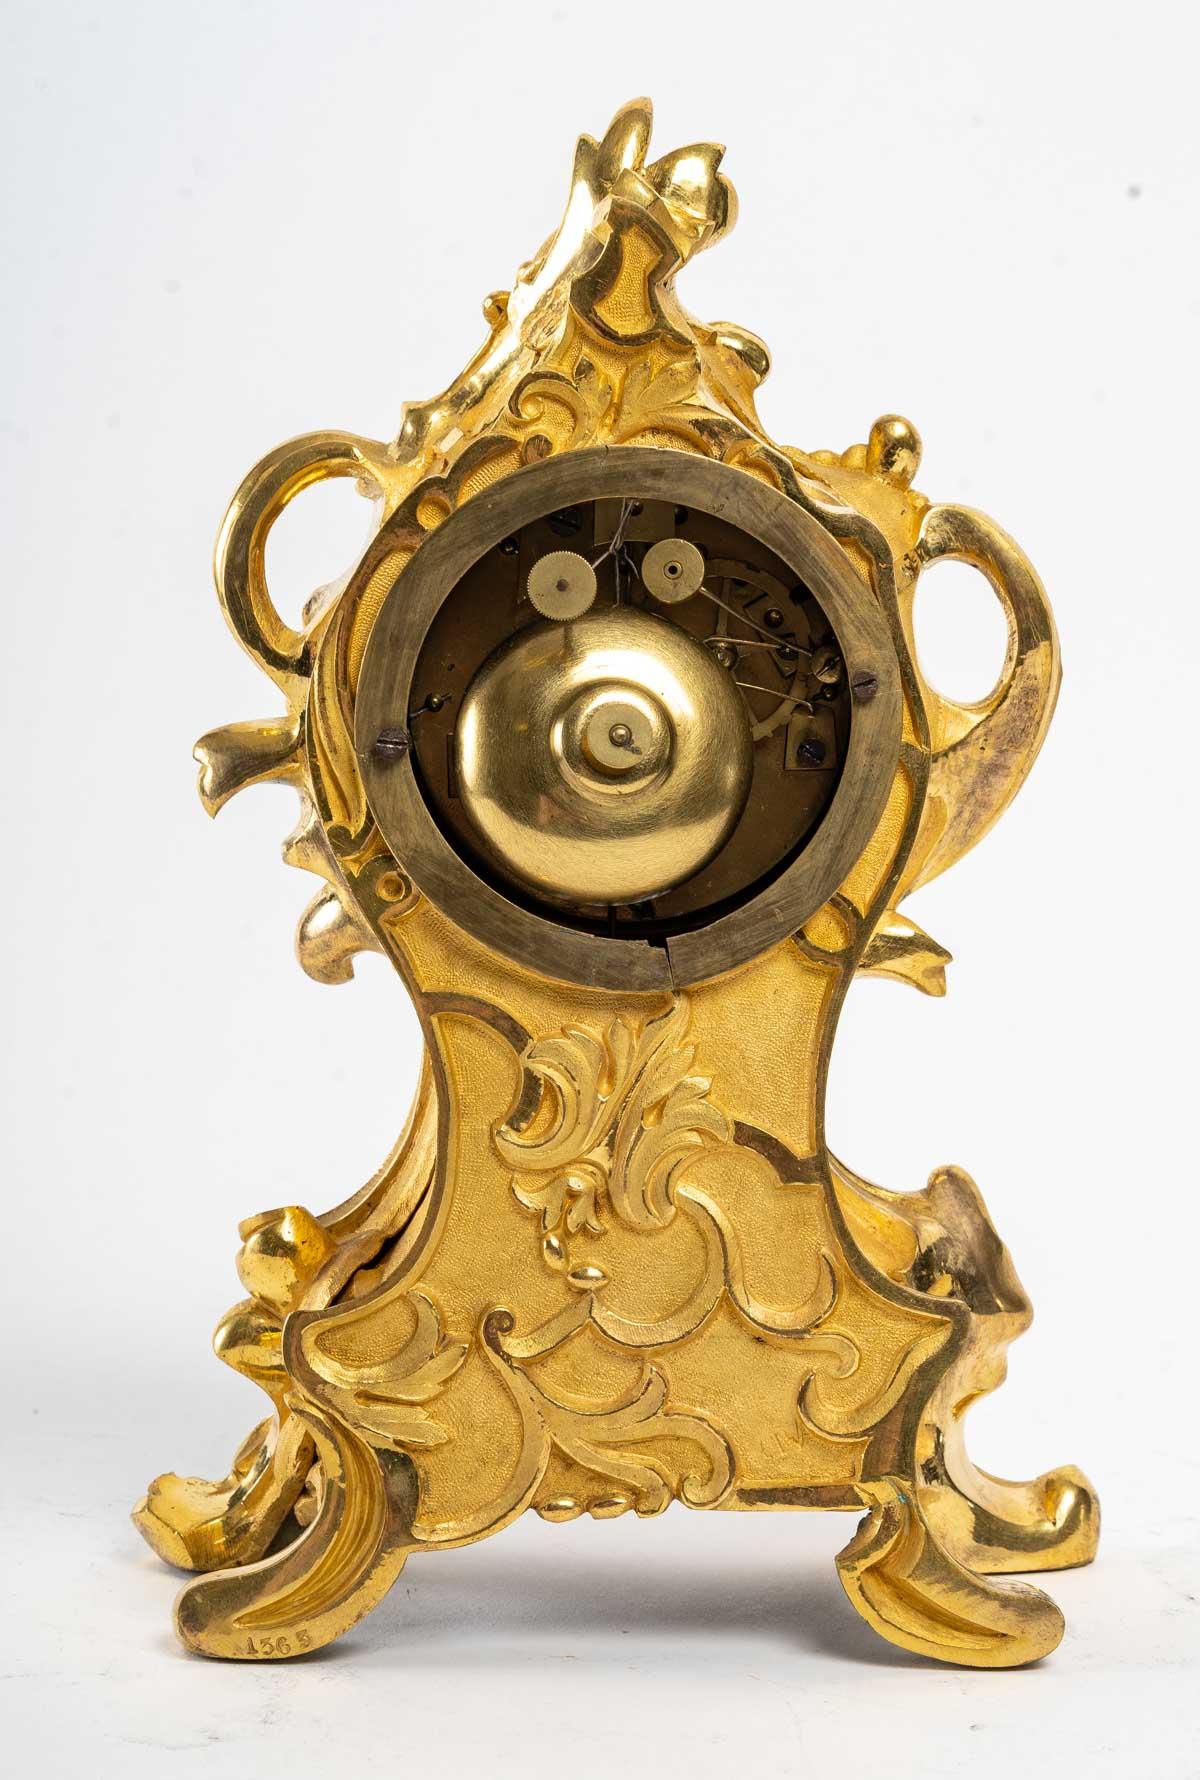 Louis XV Carriage Clocks and Travel Clocks Grandfather Clocks and Longcase Clocks Mantel For Sale